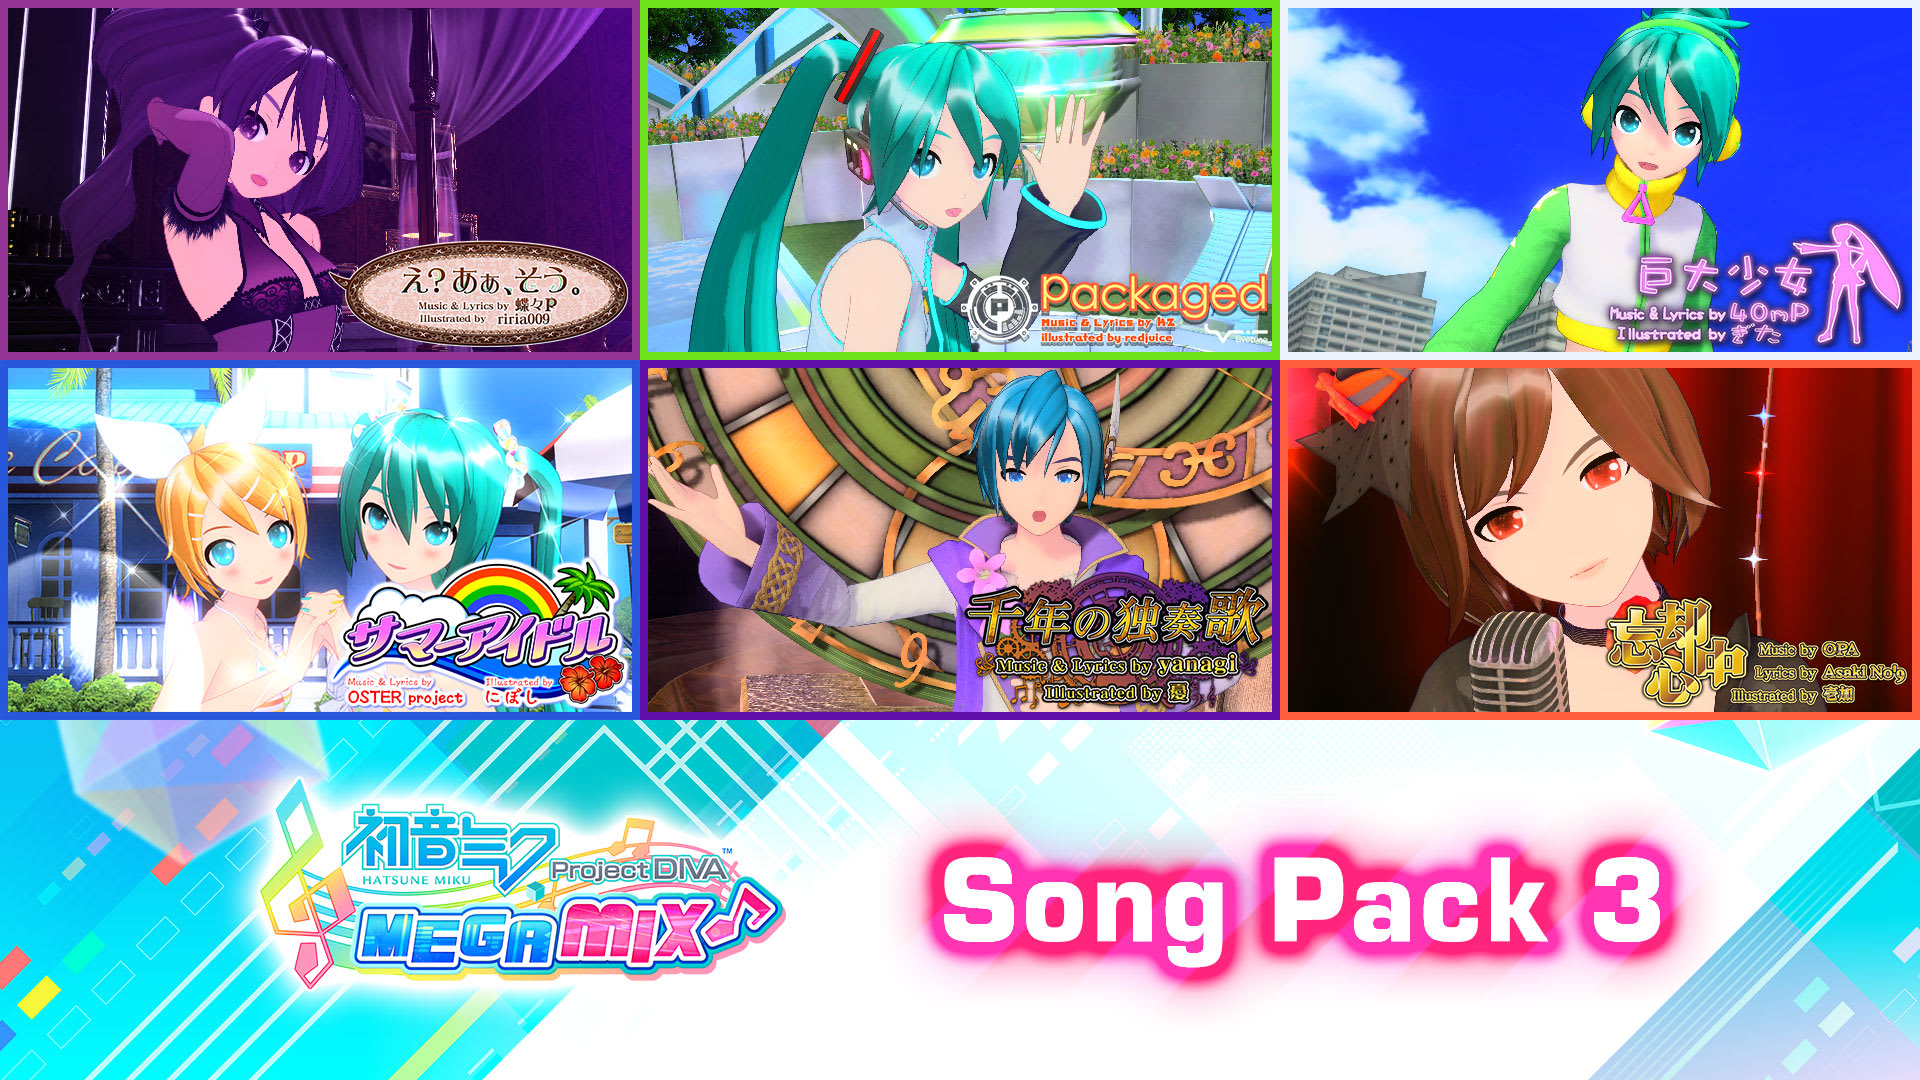 Hatsune Miku: Project DIVA Mega Mix Song Pack 3